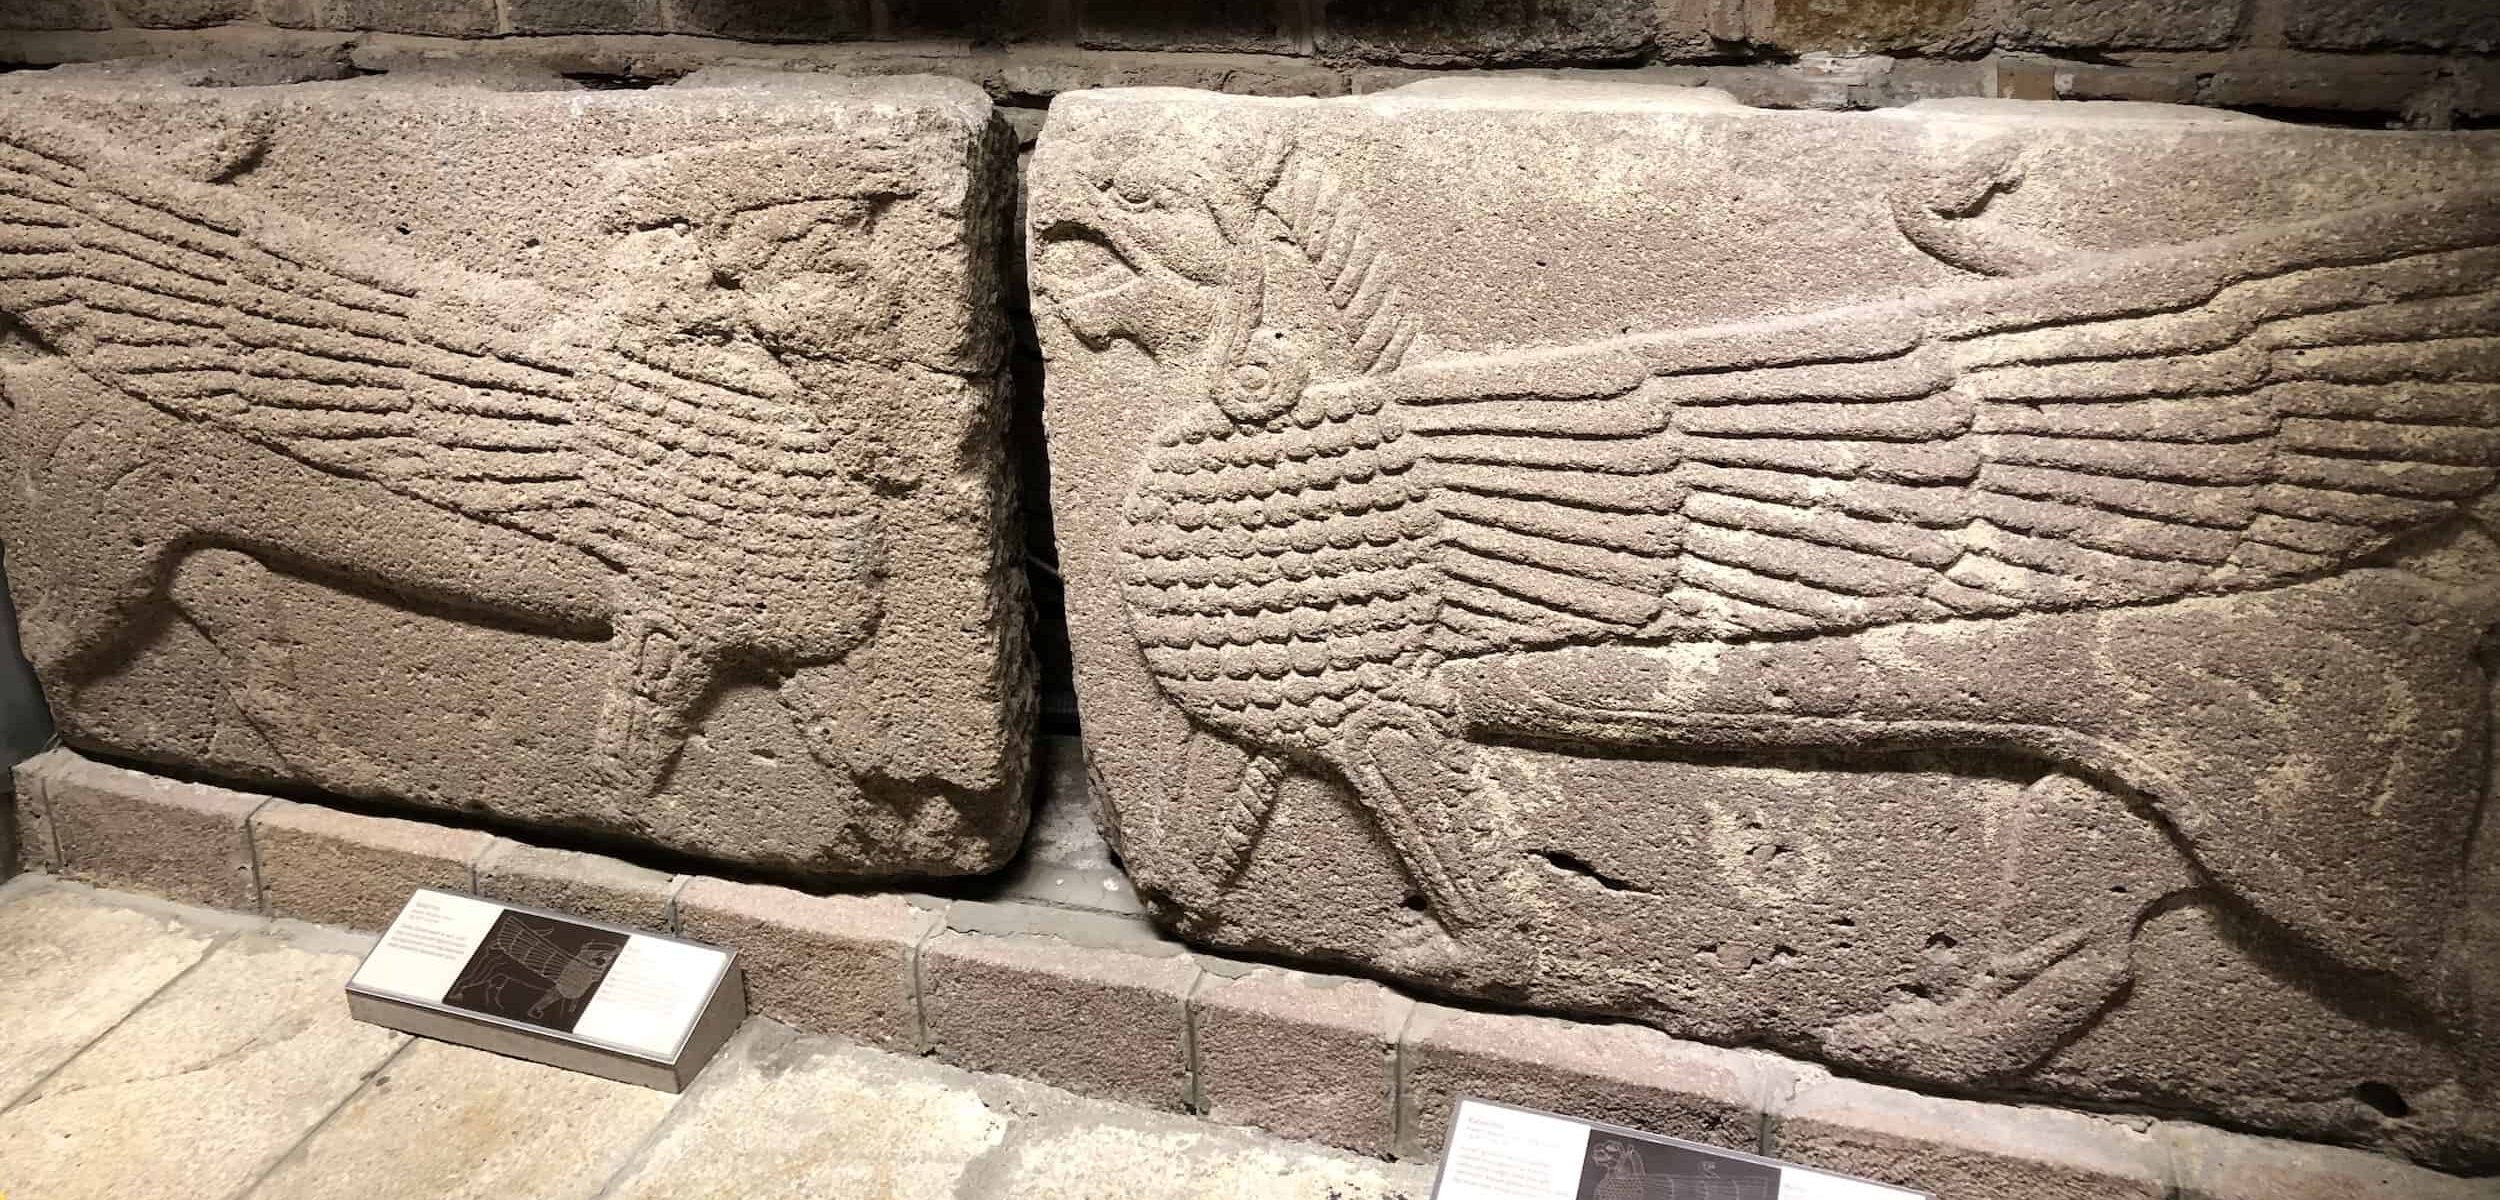 Phrygian reliefs found in Ankara at the Museum of Anatolian Civilizations in Ankara, Turkey